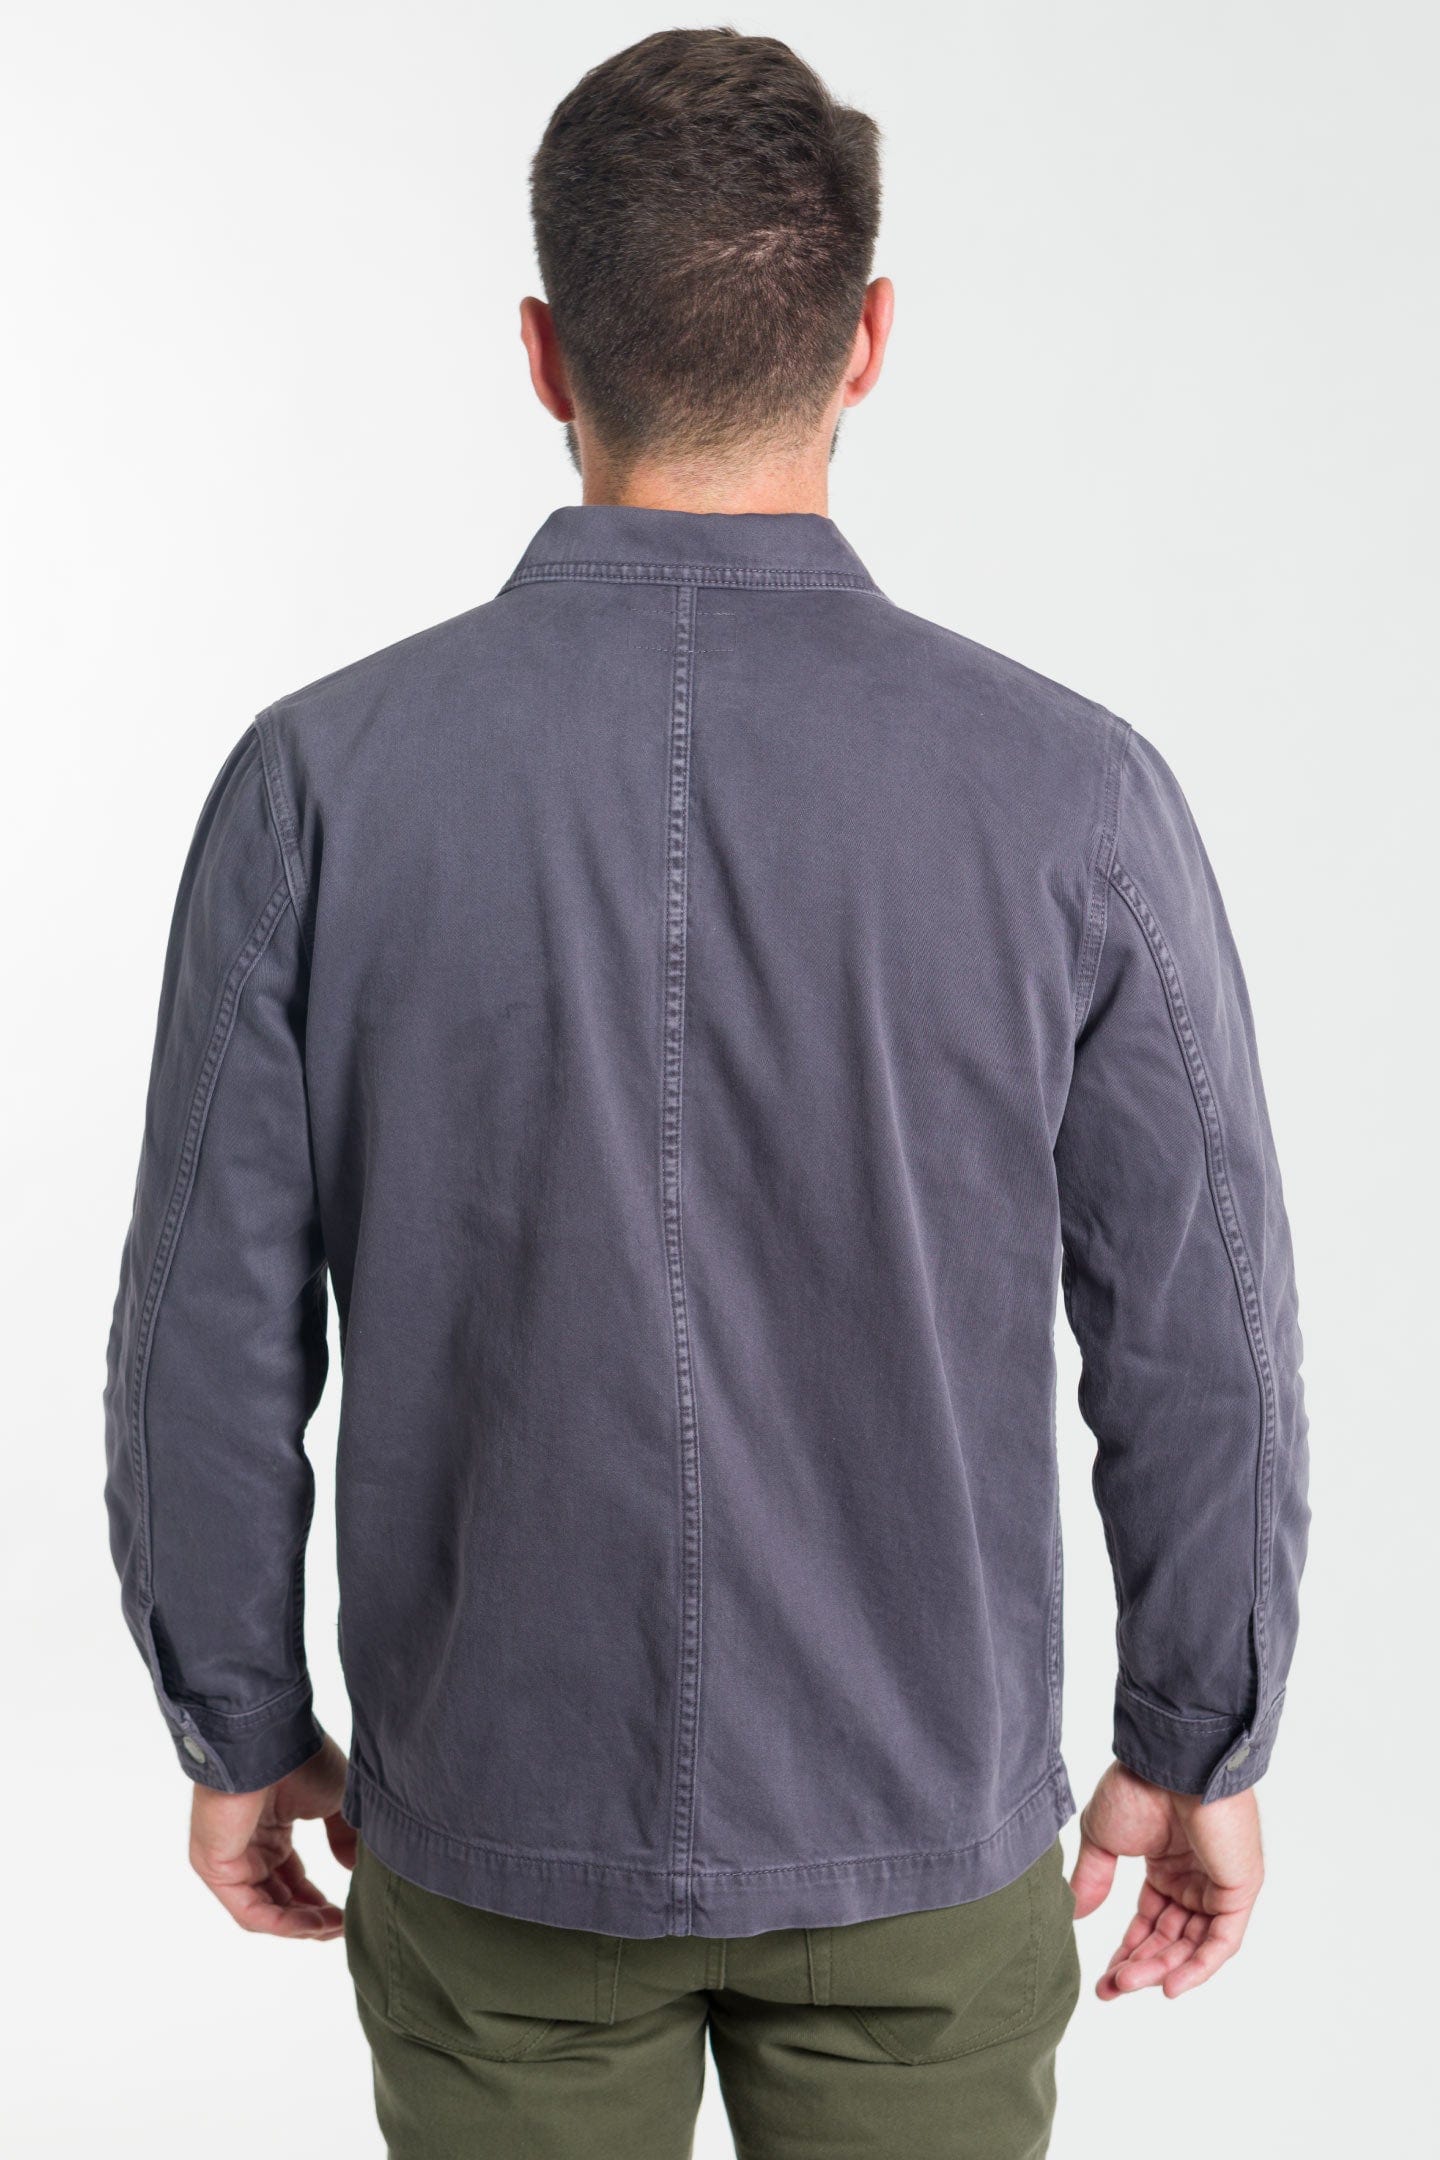 Buy Grey Harrington Jacket for Short Men | Ash & Erie   Harrington Jacket